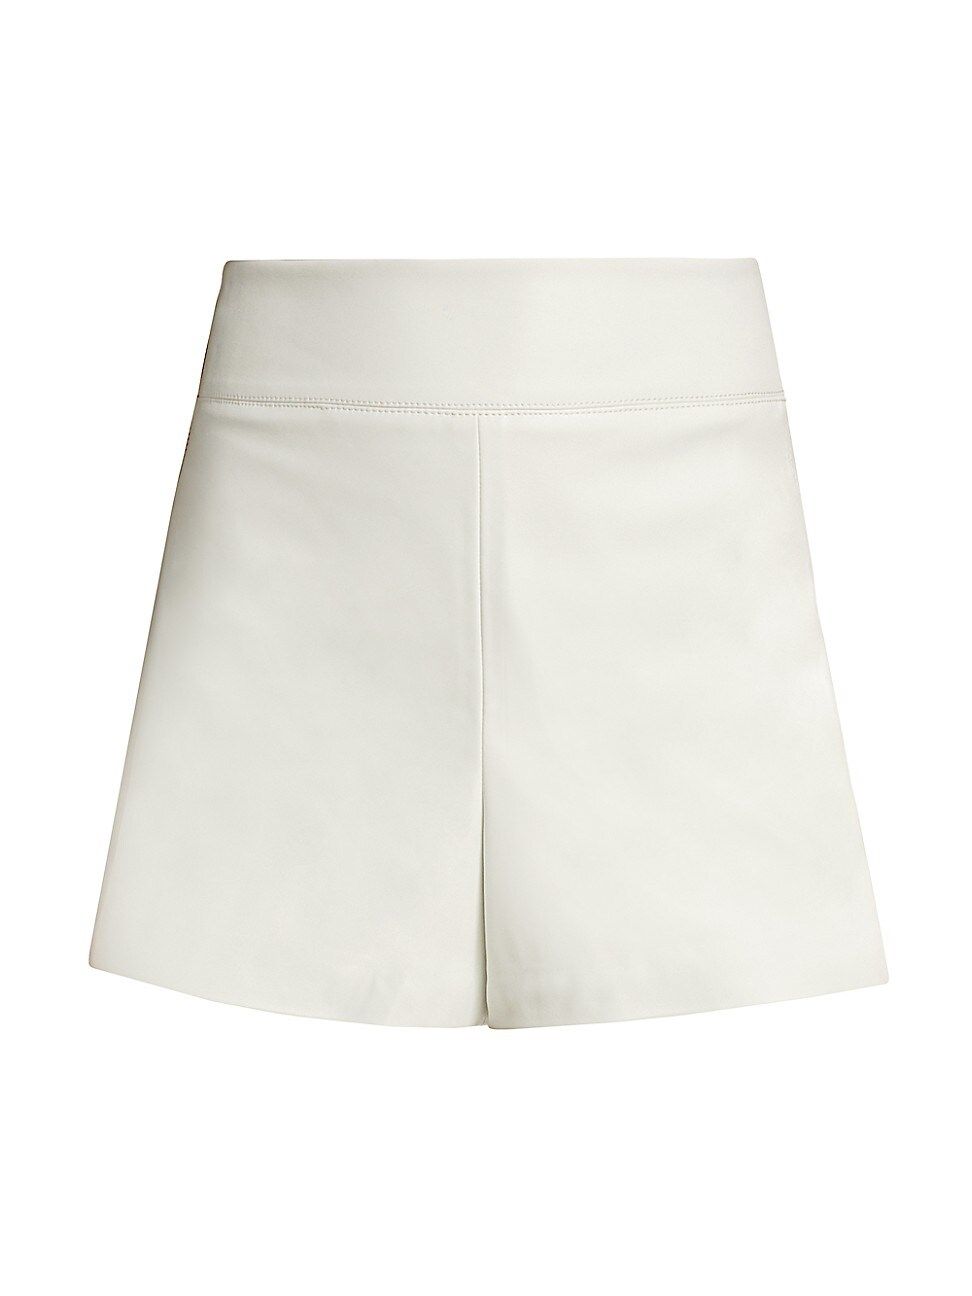 Alice + Olivia Women's Donald High-Rise Shorts - White - Size 6 | Saks Fifth Avenue